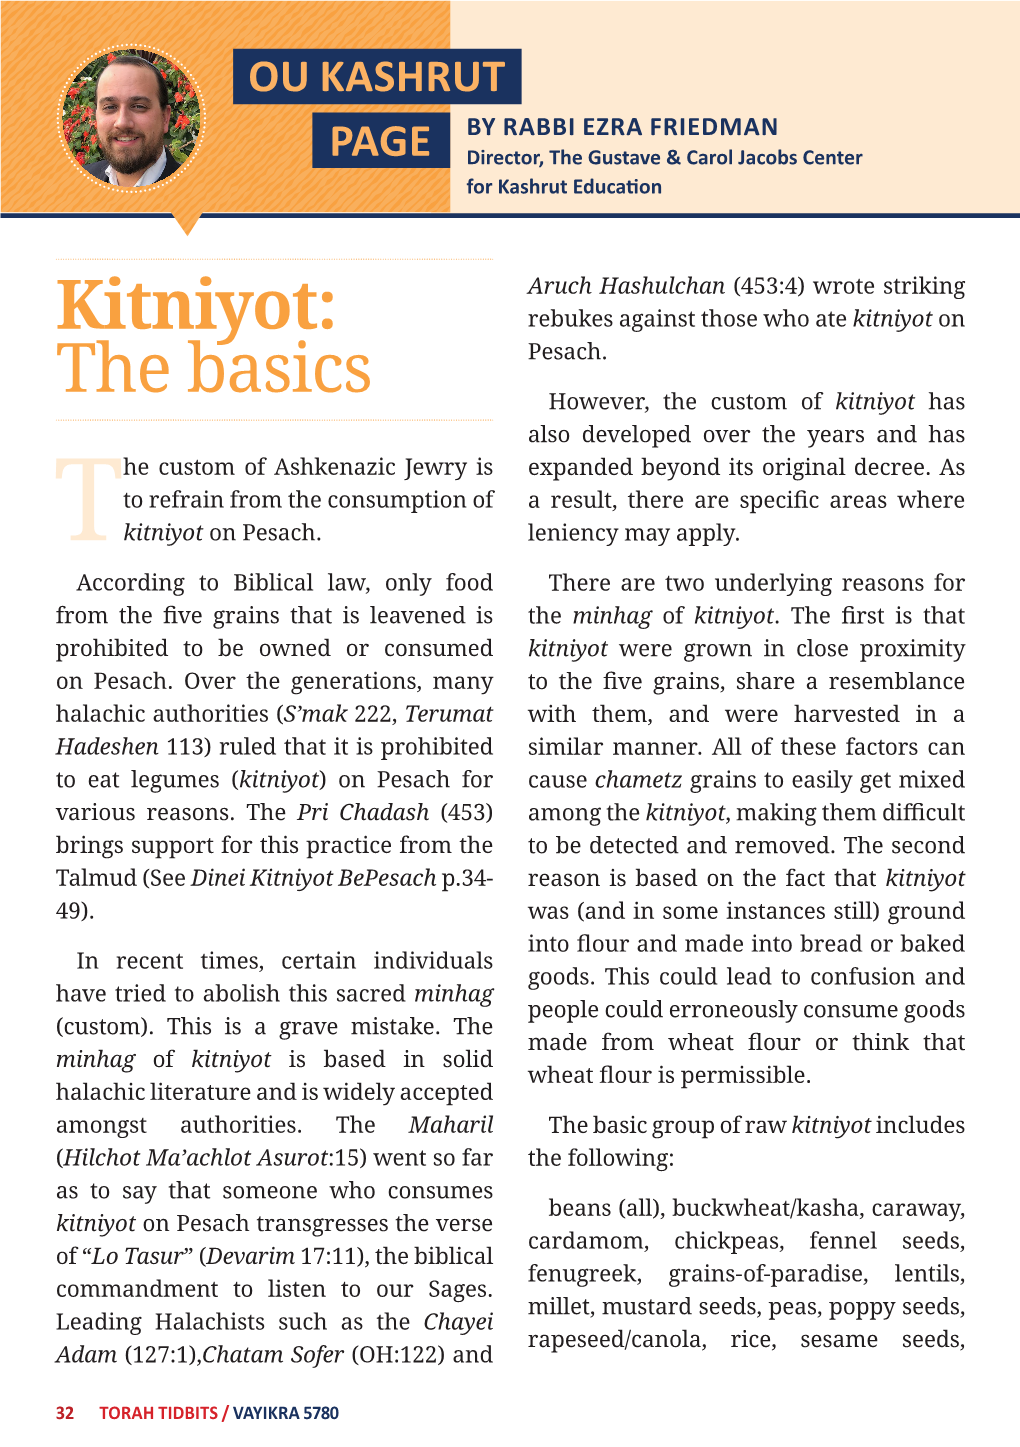 Kitniyot: Rebukes Against Those Who Ate Kitniyot on Pesach